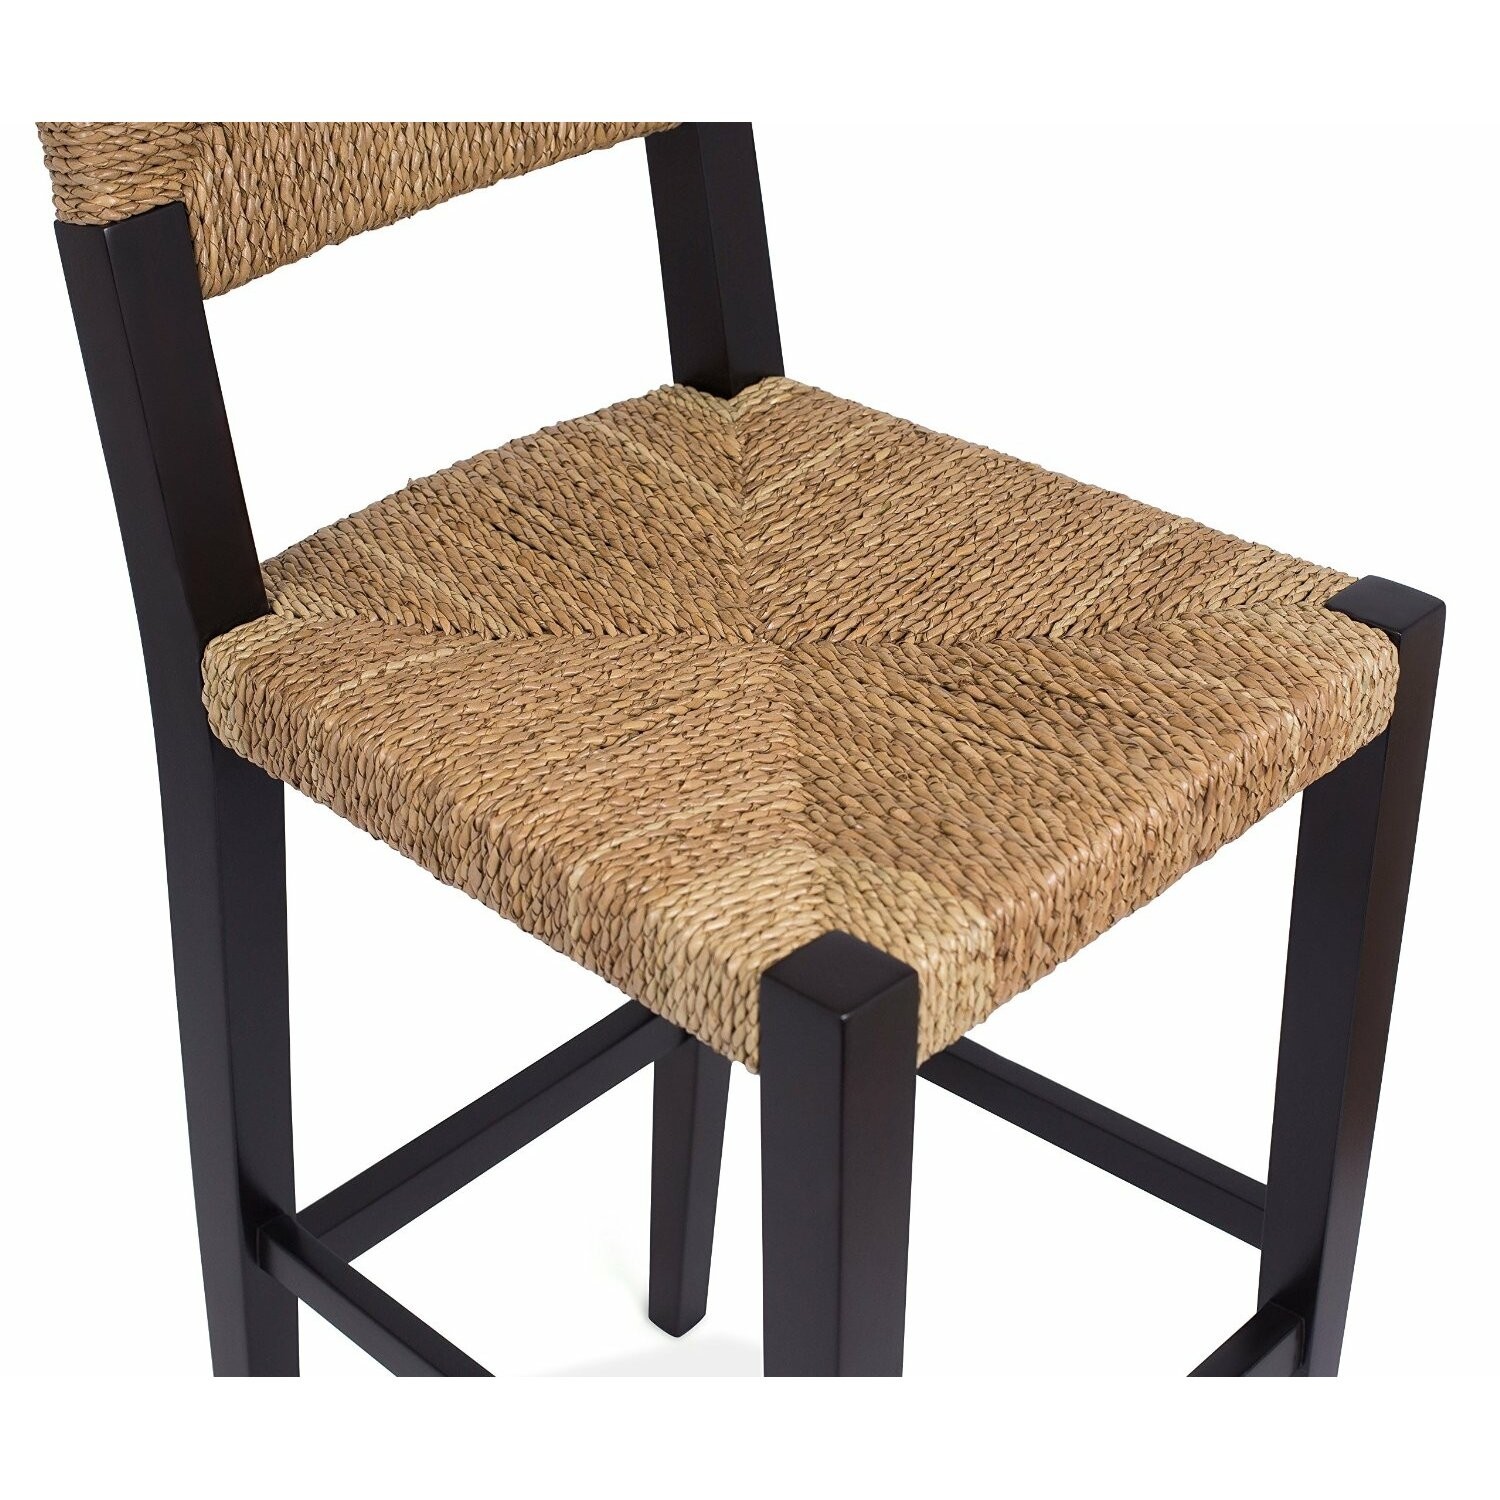 Birdrock home rush weave 30 bar height bar stool wayfair